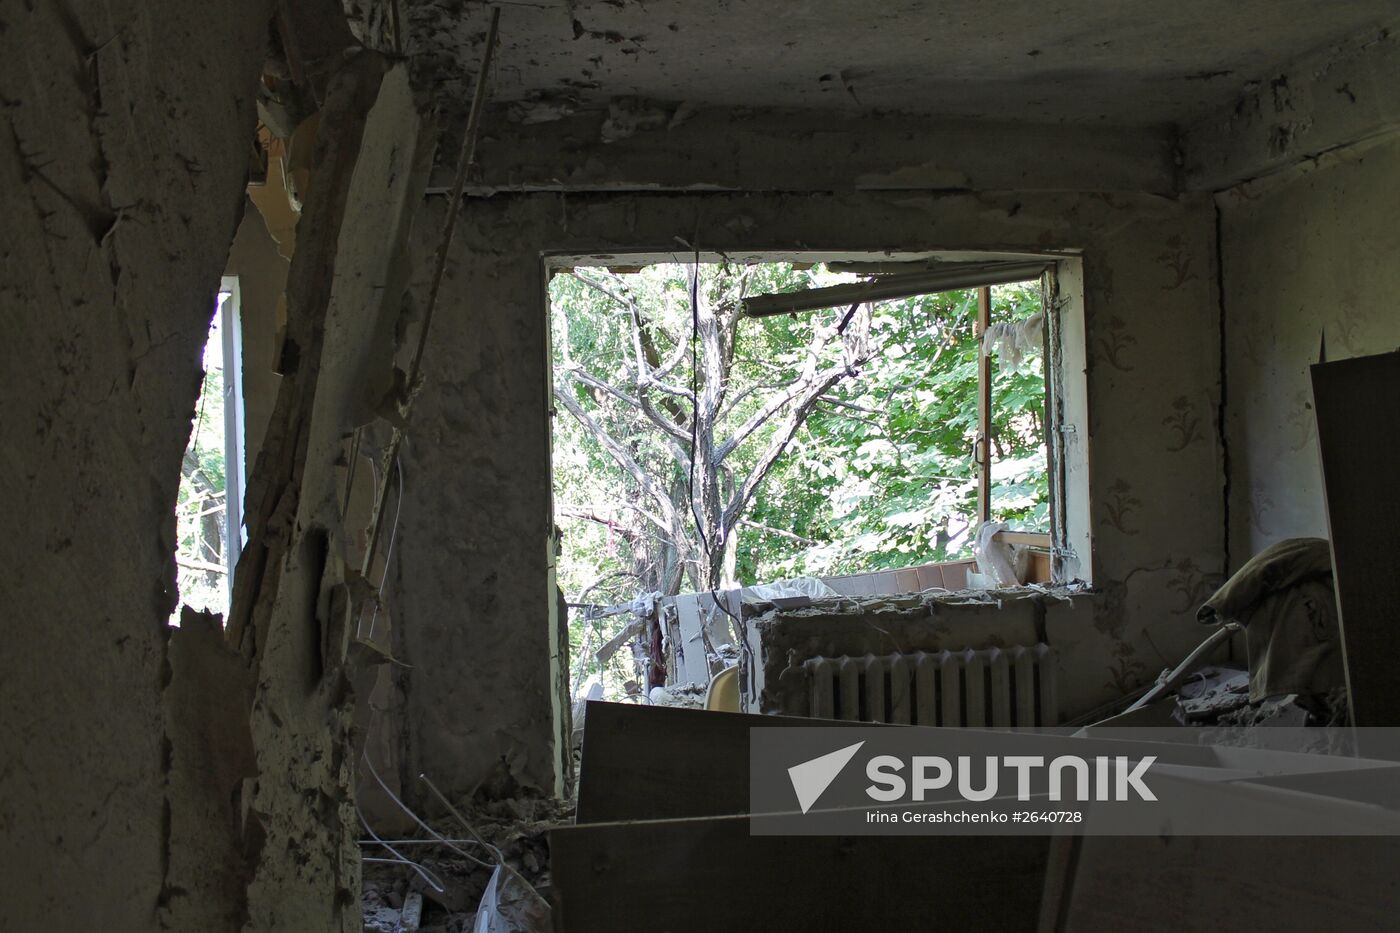 Aftermath of shelling in Oktyabrsky community, Donetsk